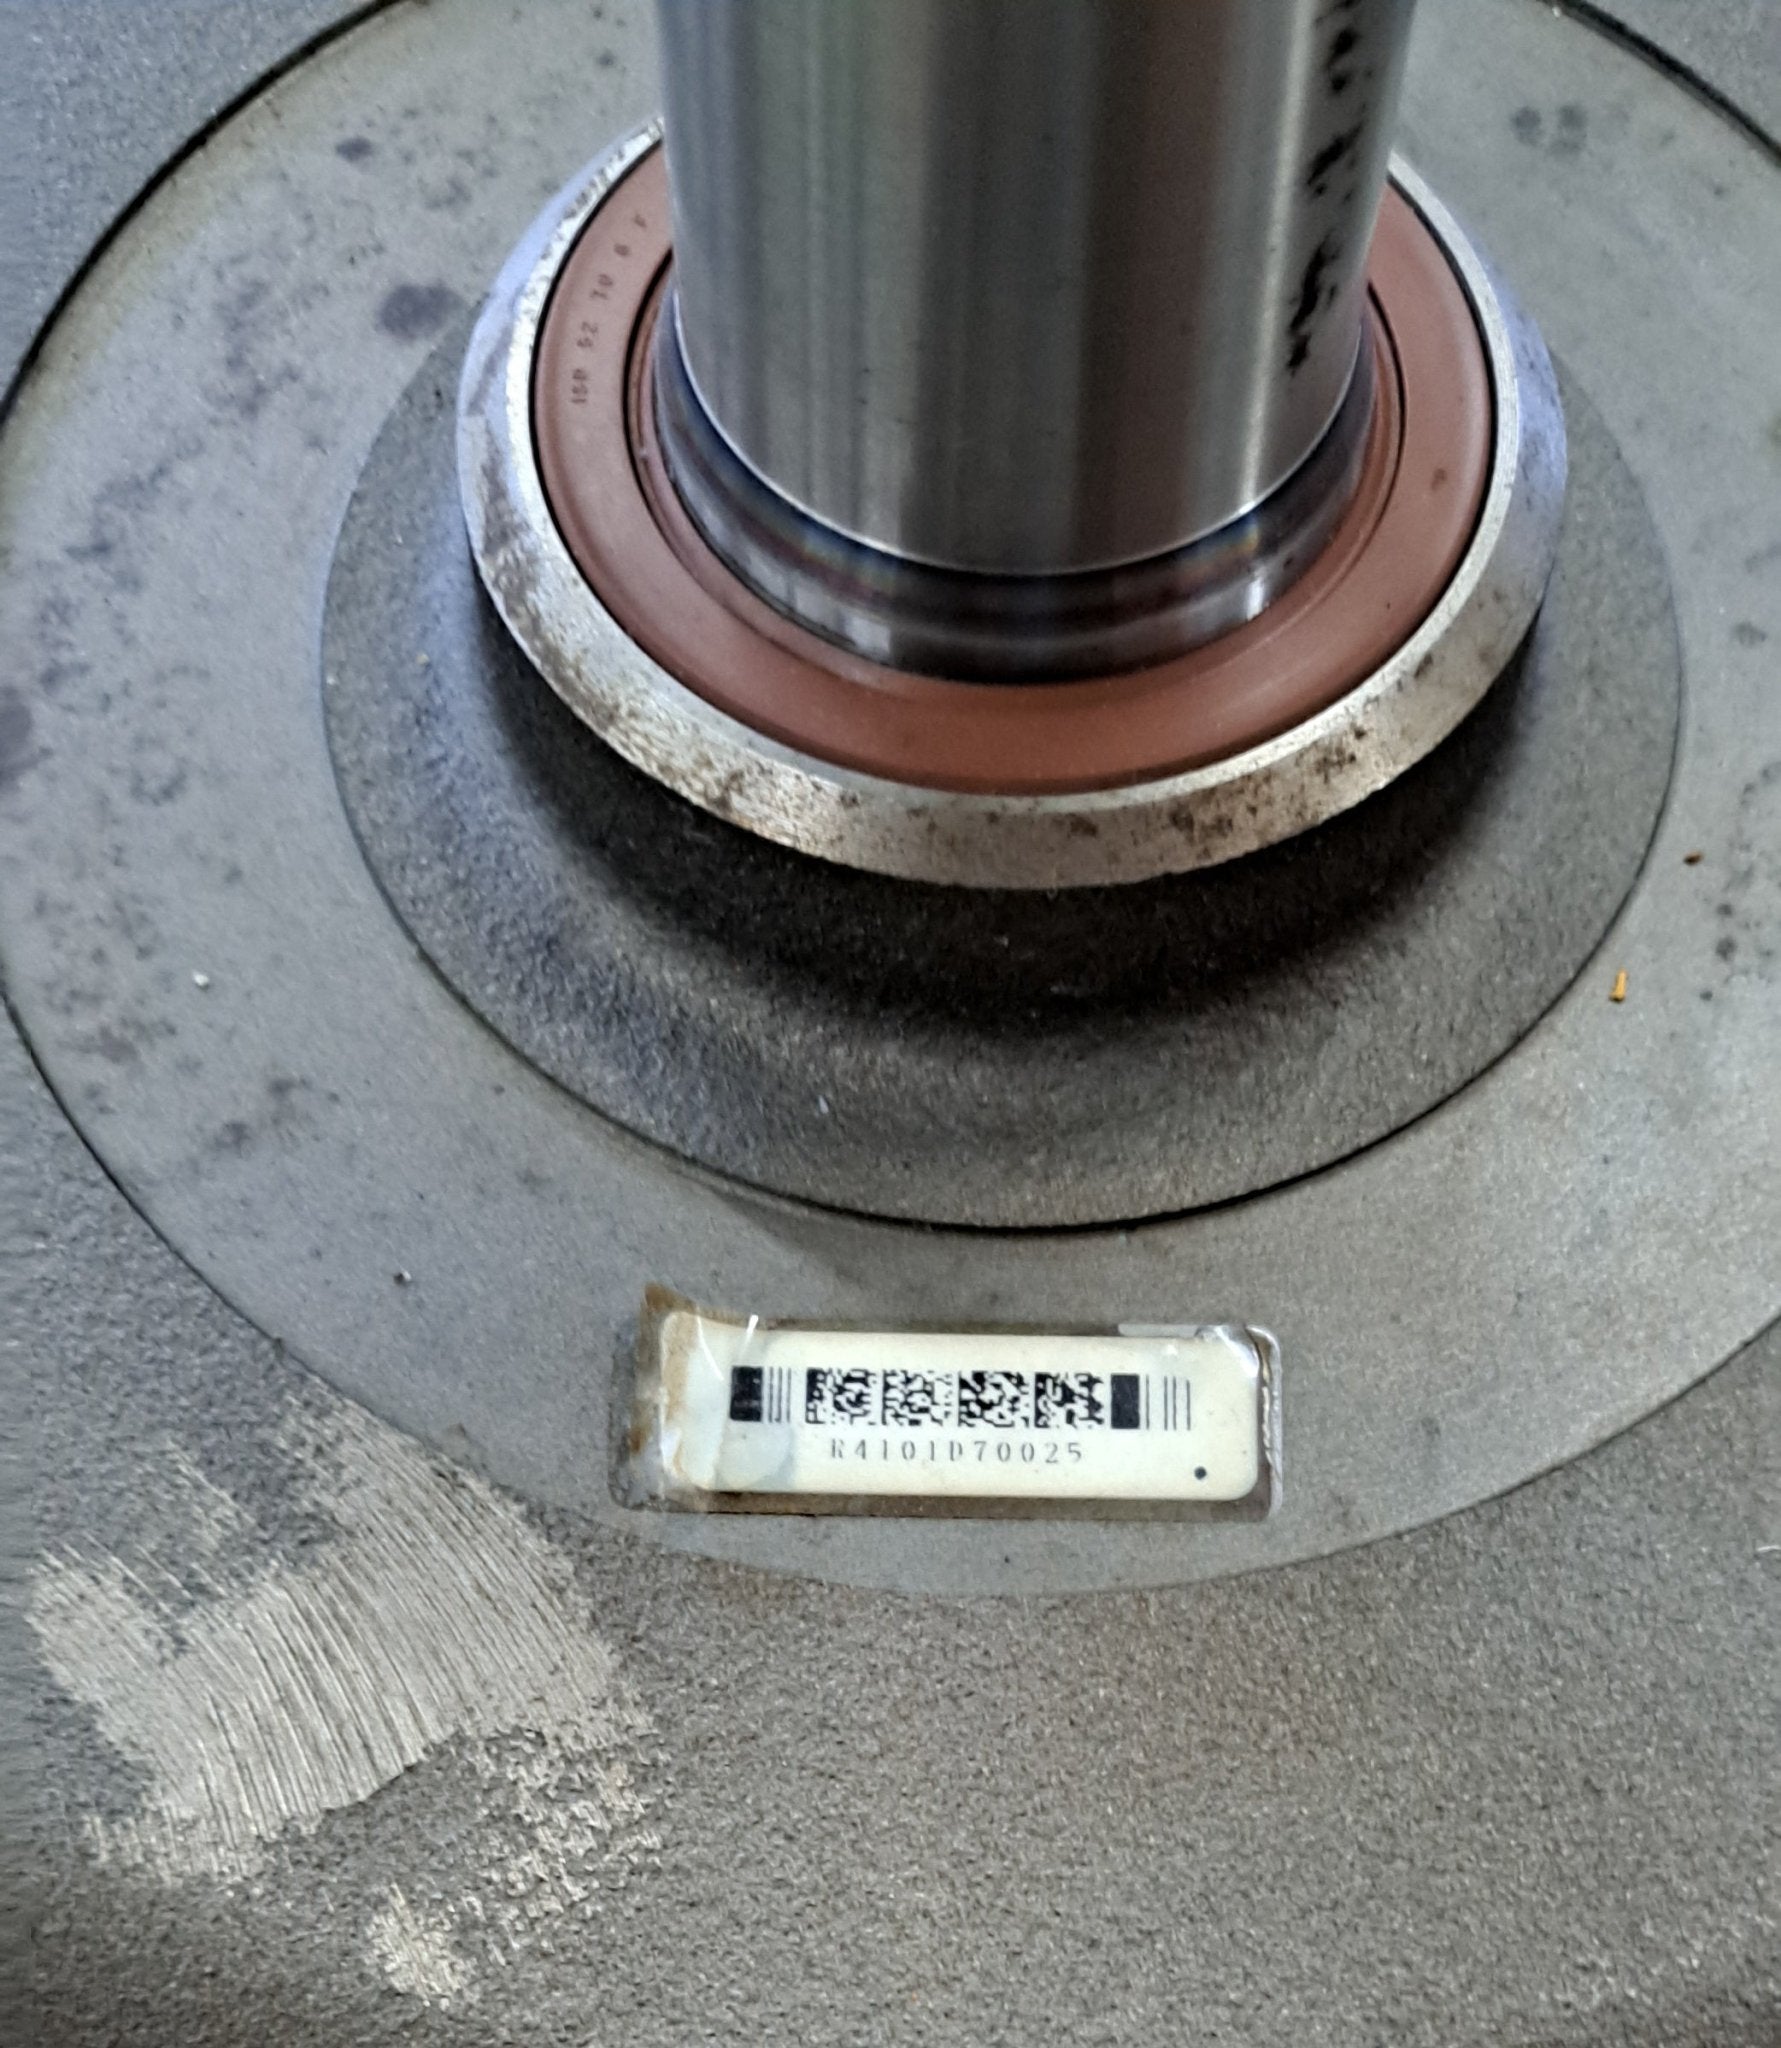 Kuka Getriebe 00-122-876 - #product_category# | Klenk Maschinenhandel